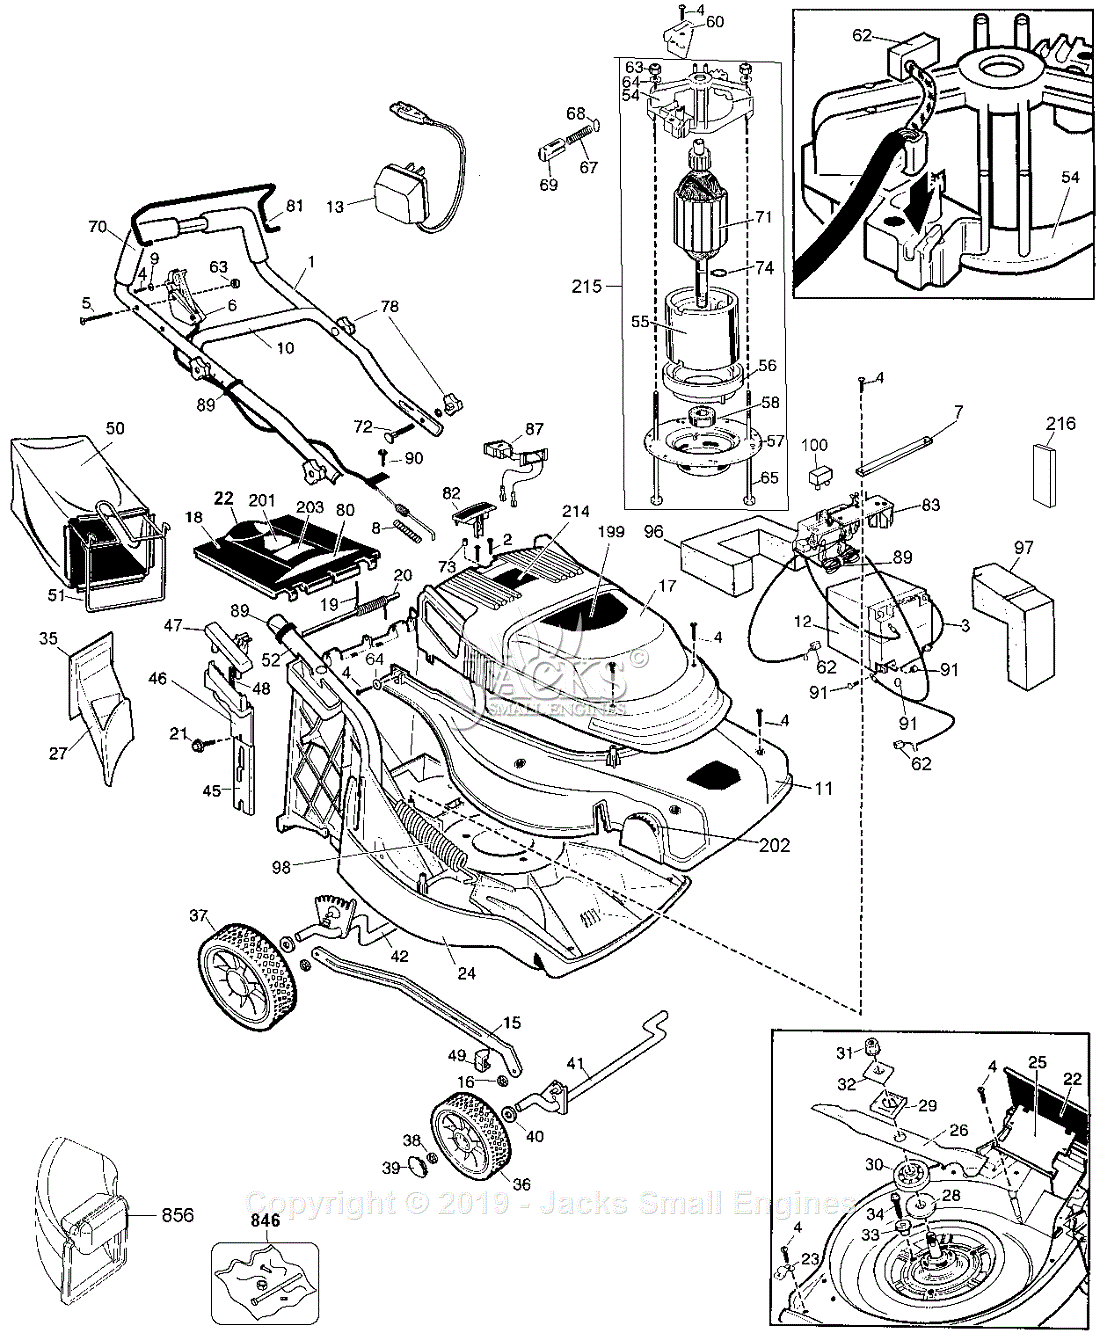 https://az417944.vo.msecnd.net/diagrams/manufacturer/black-decker/lawn-mower/cmm1000-type-5/mower/diagram_1.gif